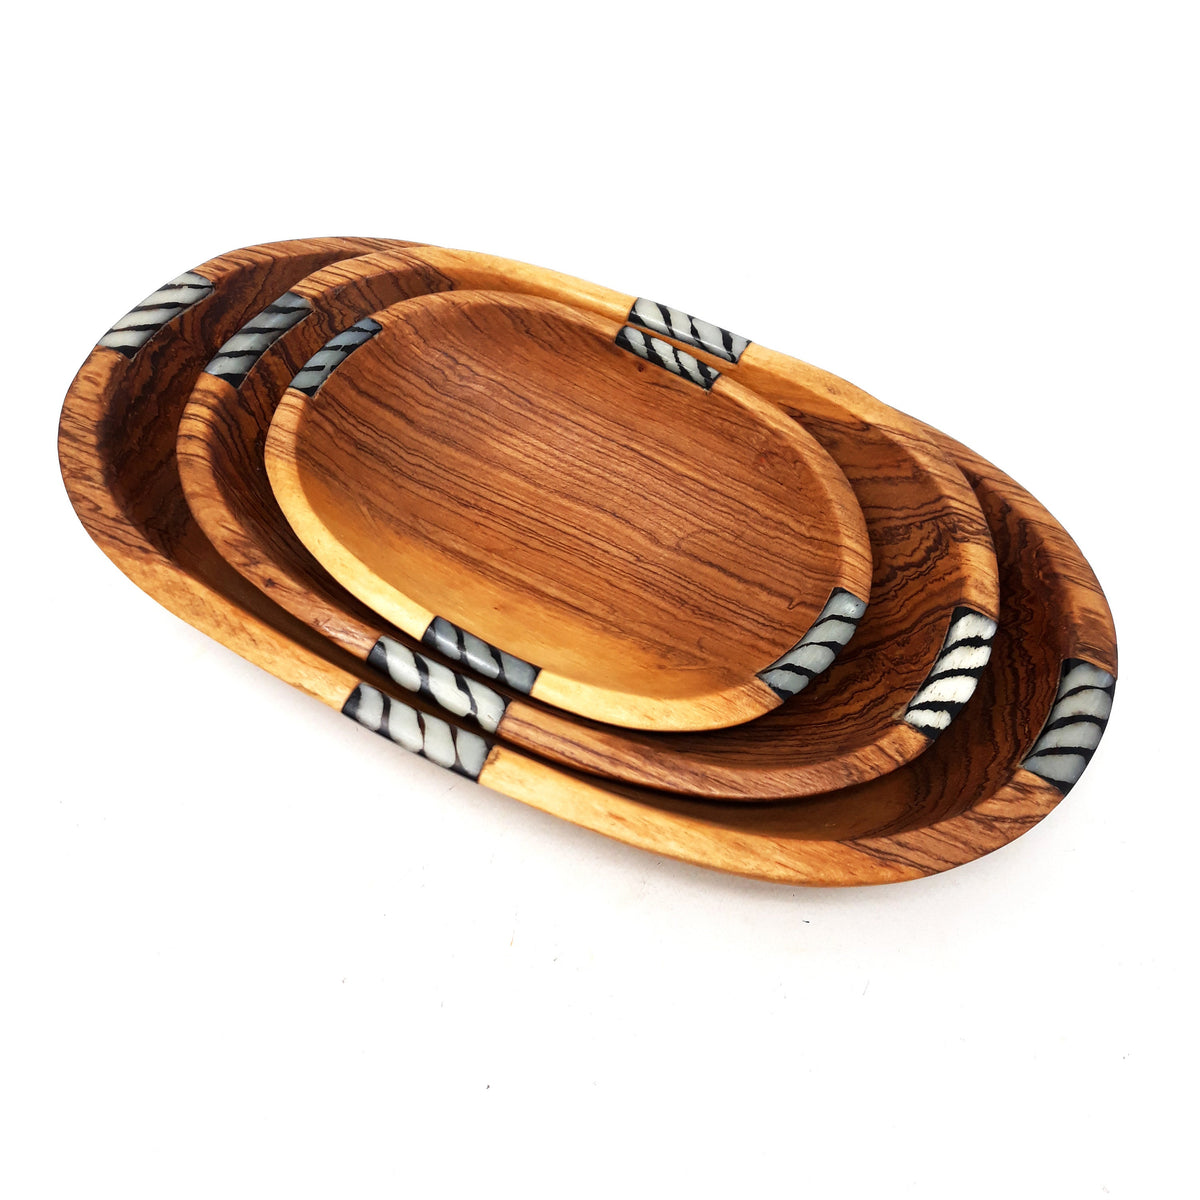 Wooden bowl sets,  set of 3 wooden bowls, Handmade wooden bowls, Olivewood bowls, Farmhouse wood bowl, wooden snack bowl, set of wood bowls,